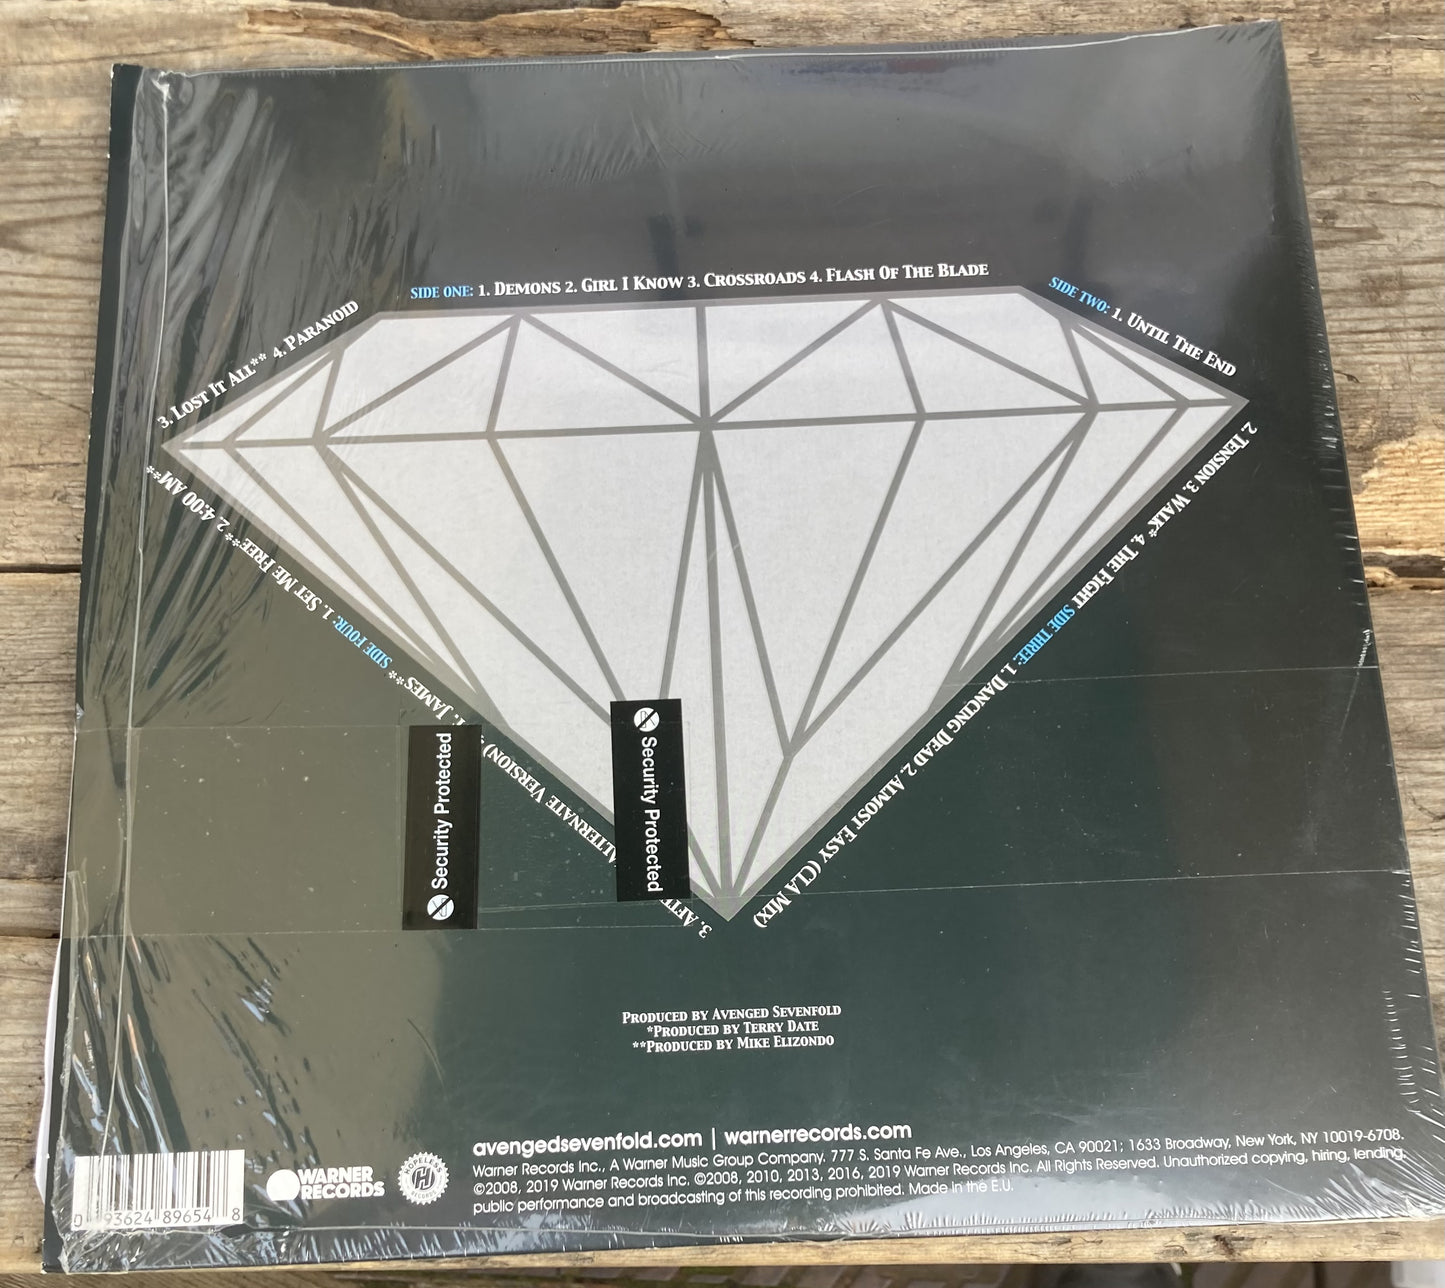 The back of 'Avenged Sevenfold - Diamonds in the Rough' on vinyl